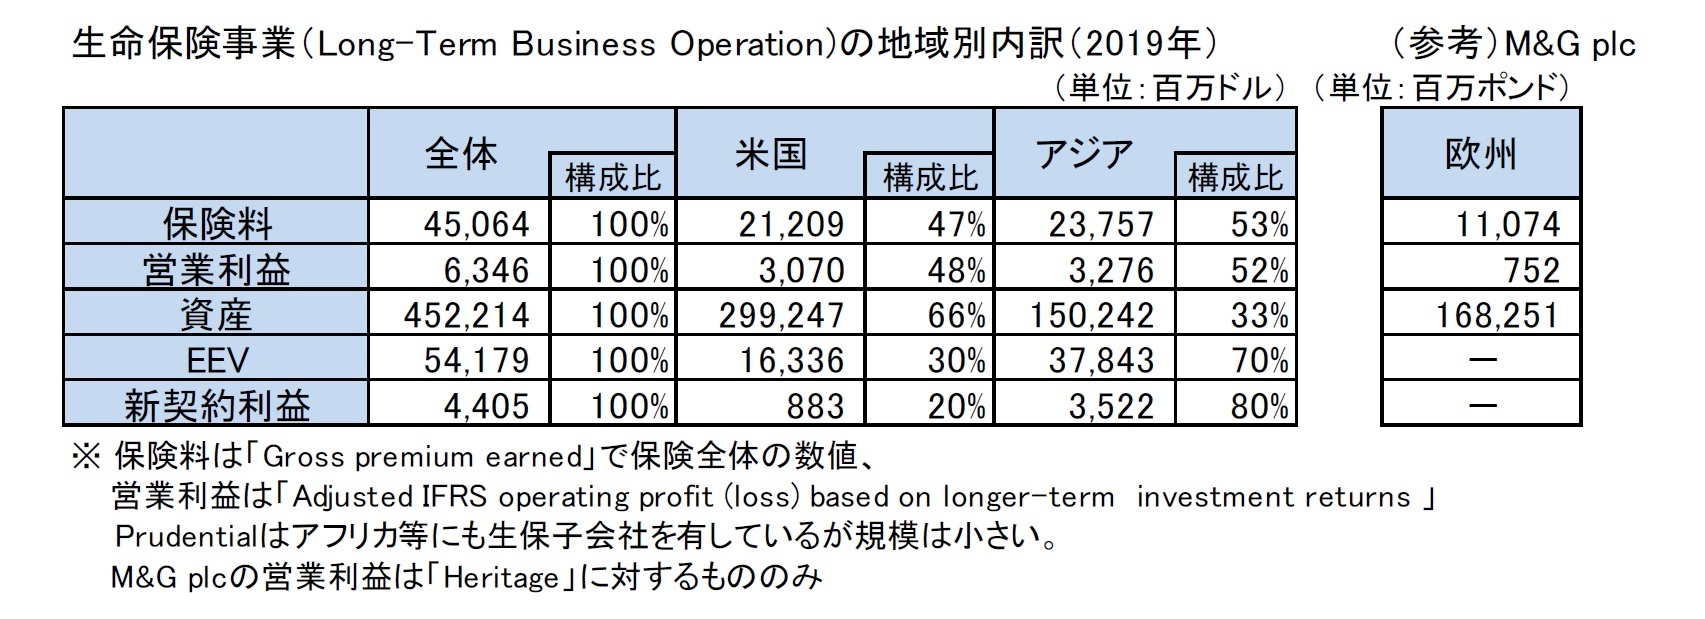 生命保険事業（Long-Term Business Operation)の地域別内訳（2019年）/（参考）M&G plc